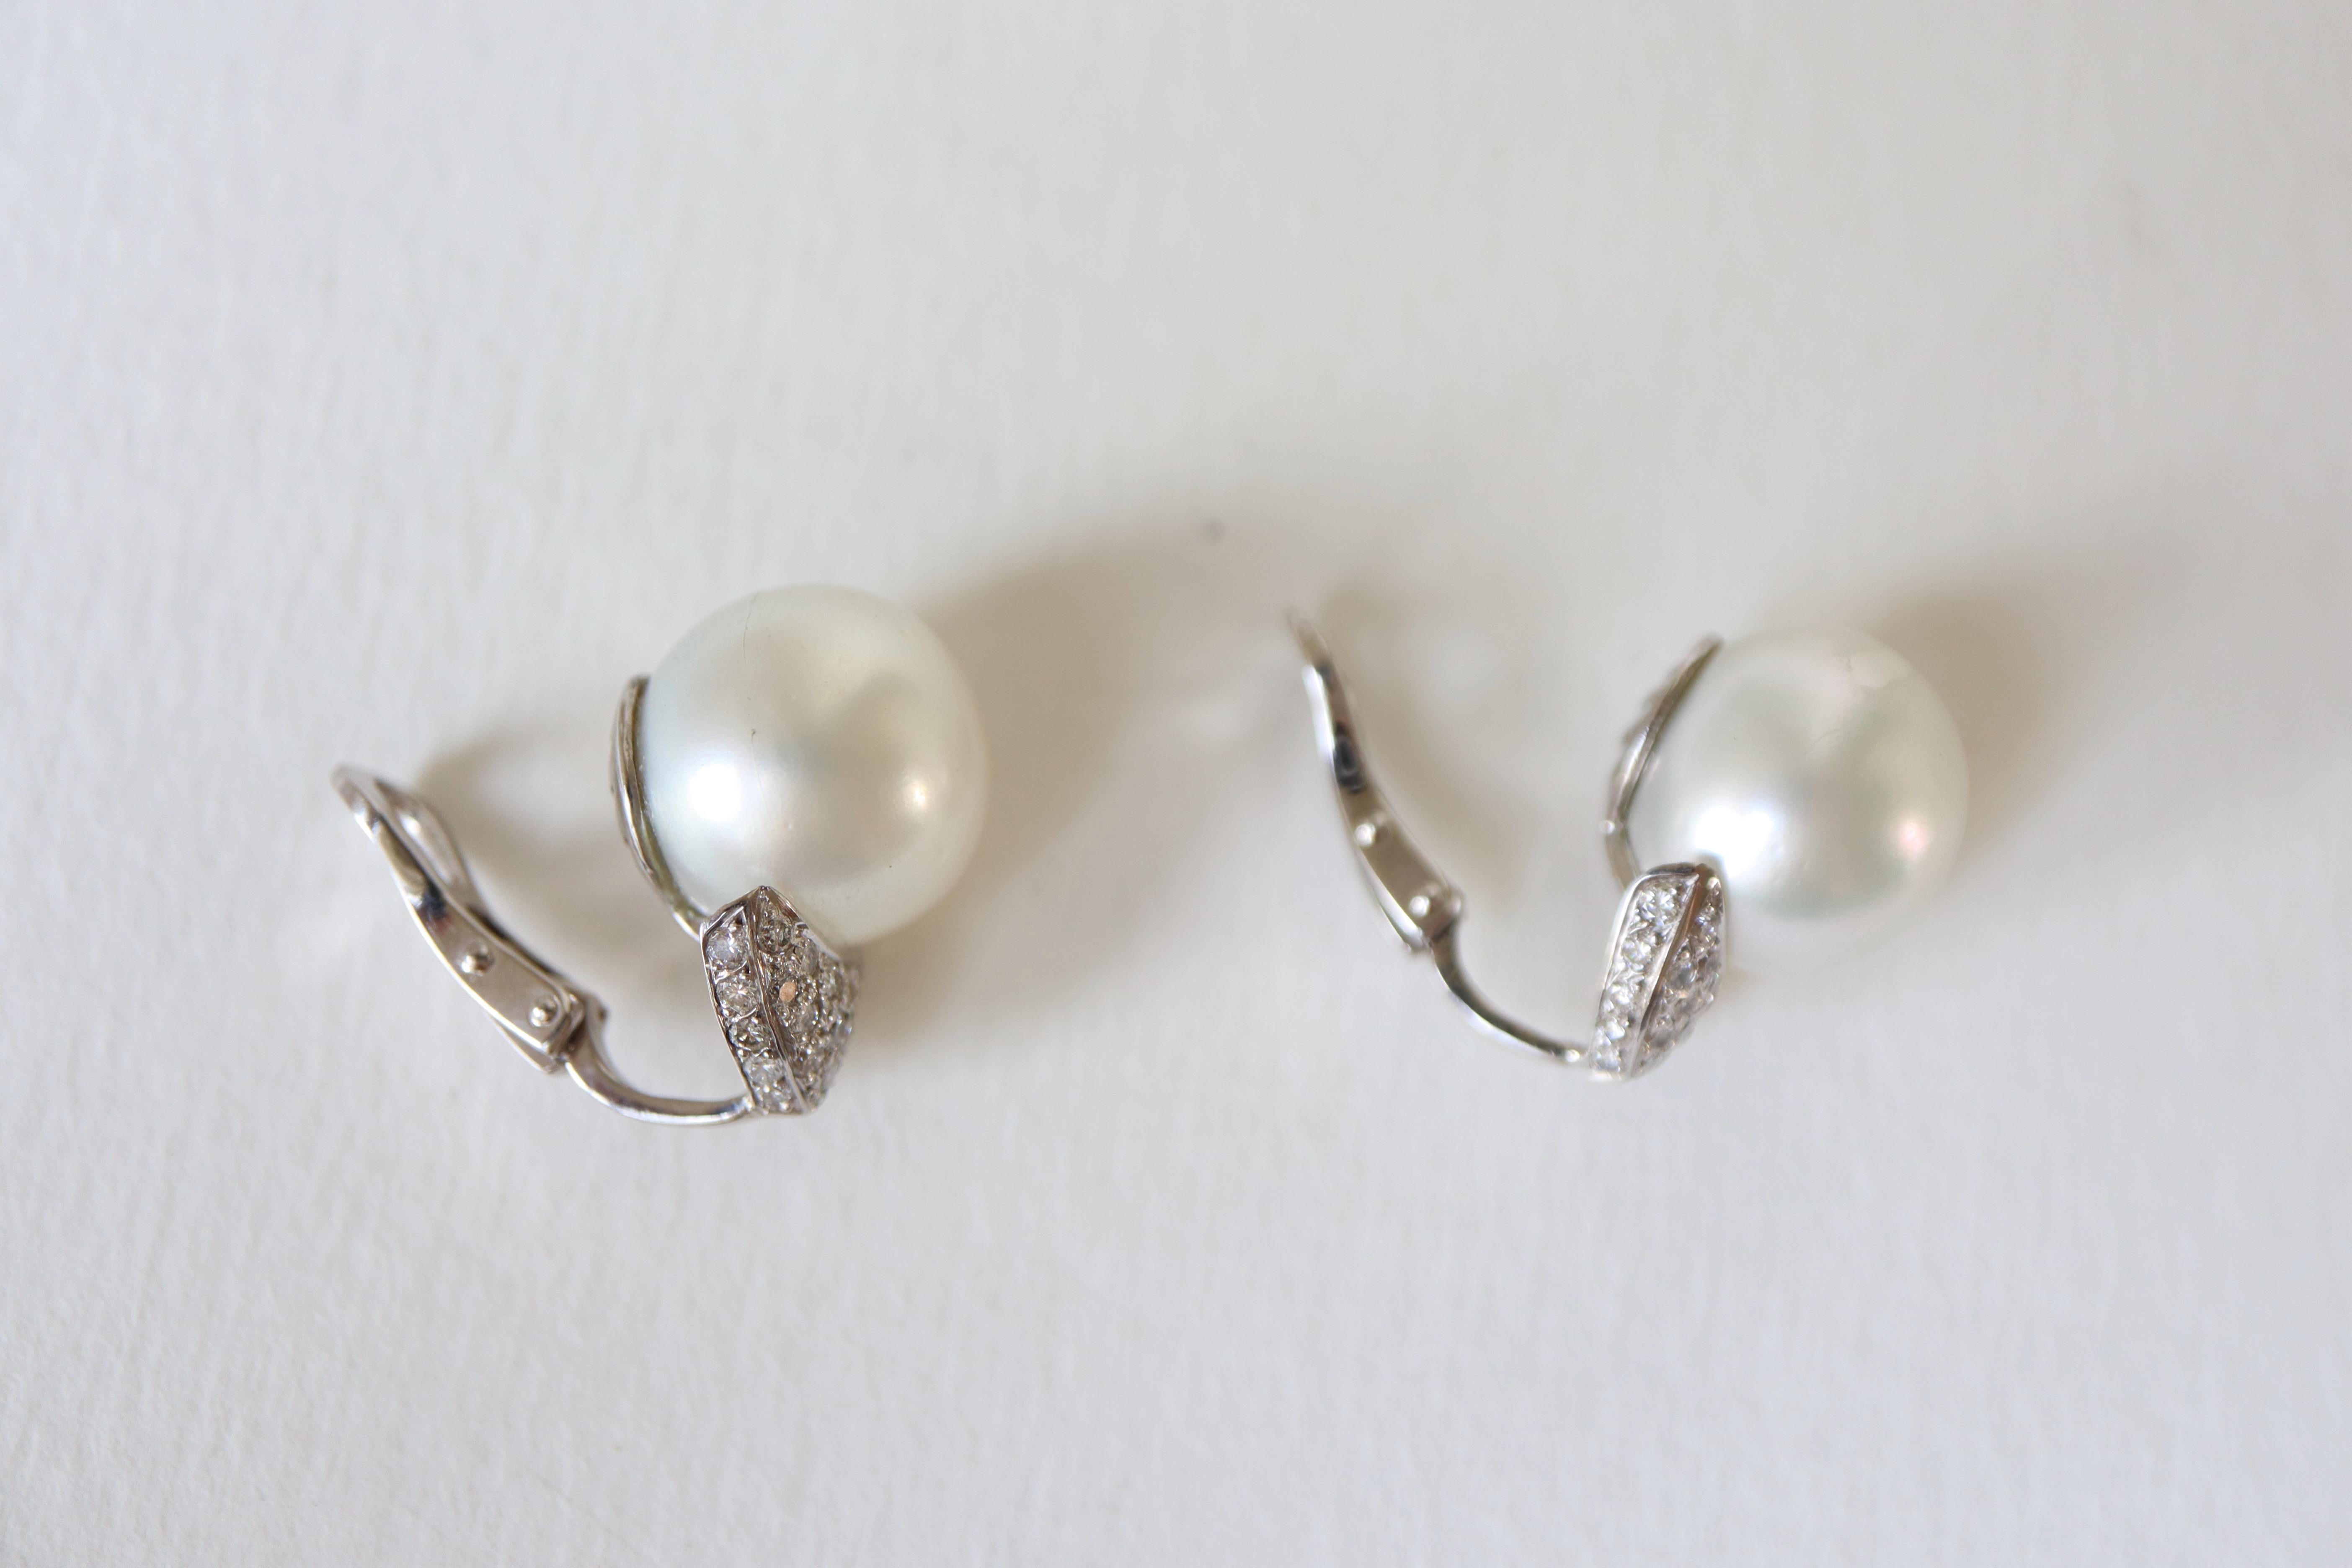 0.7 carat diamond earrings